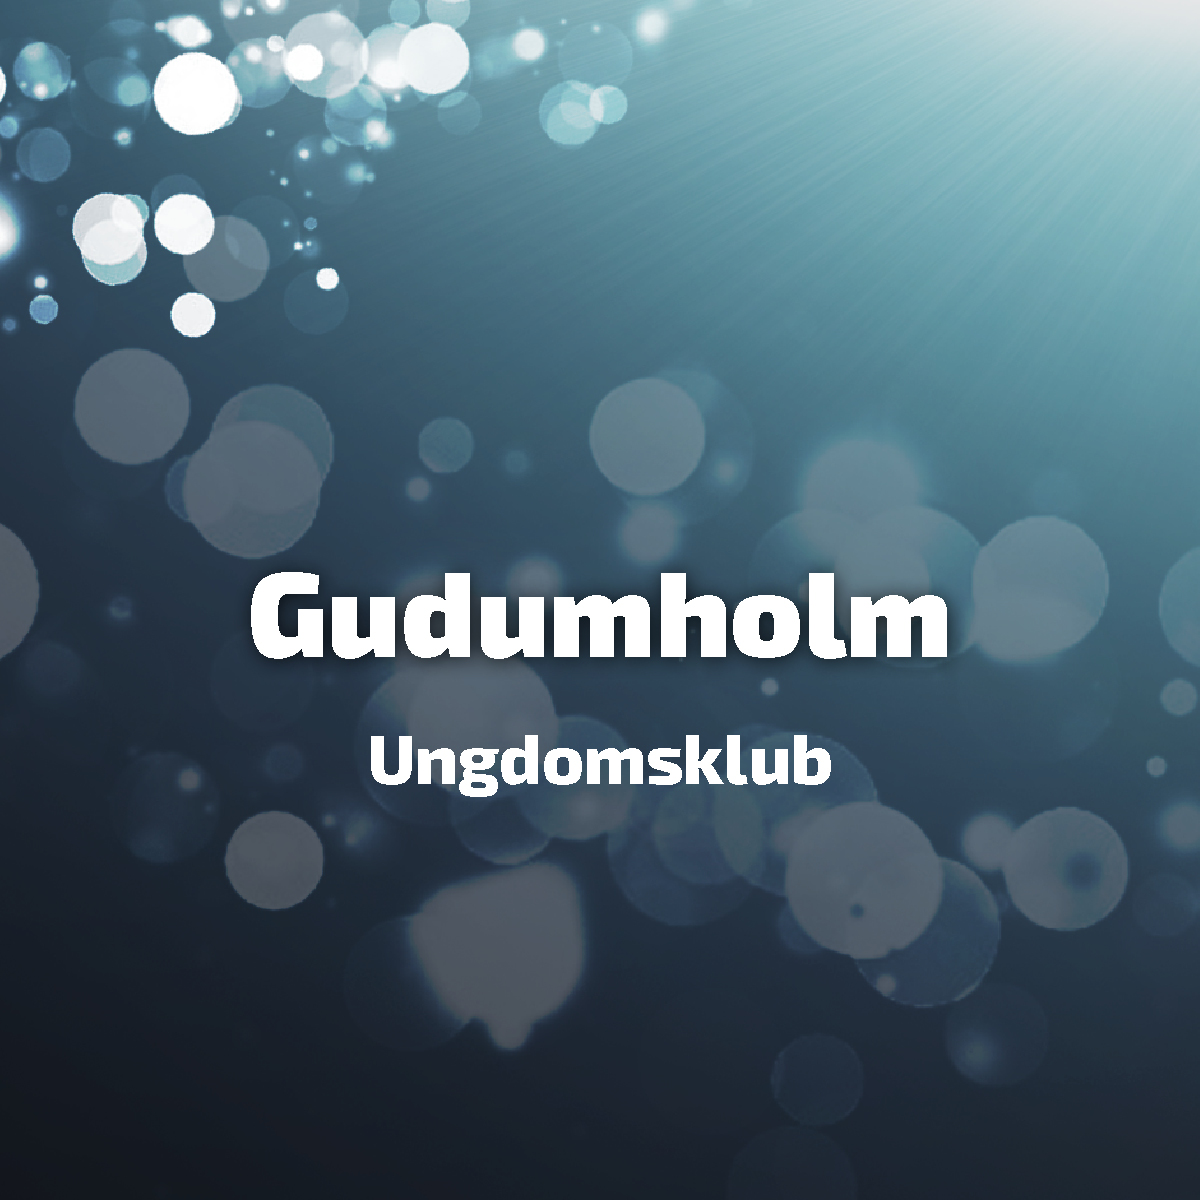 Gudumholm Ungdomsklub